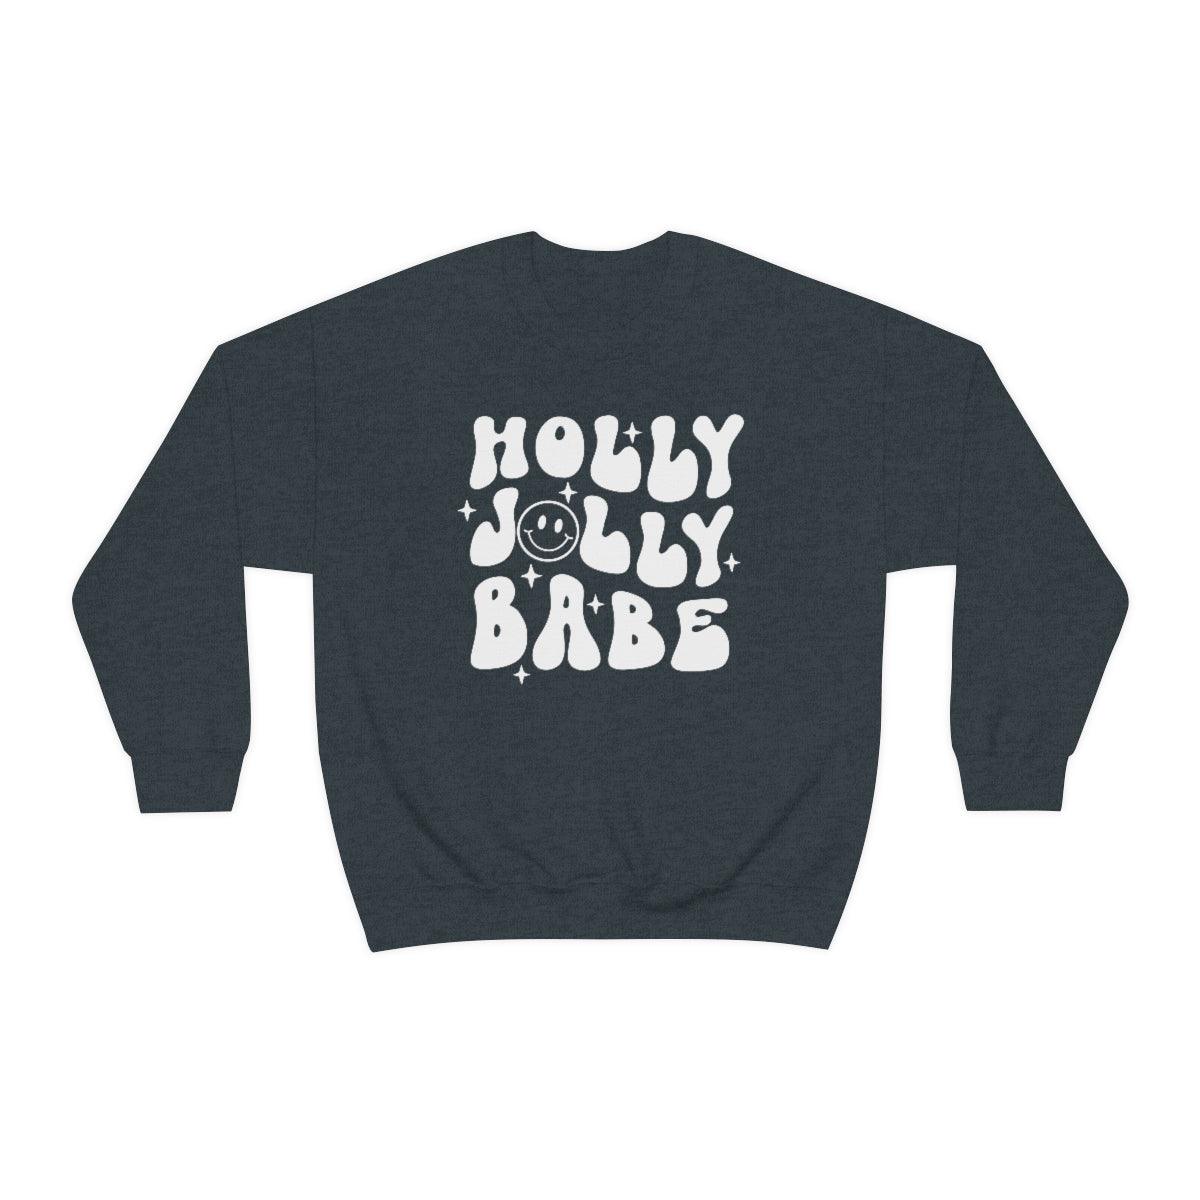 Retro Holly Jolly Babe Christmas Crewneck Sweater